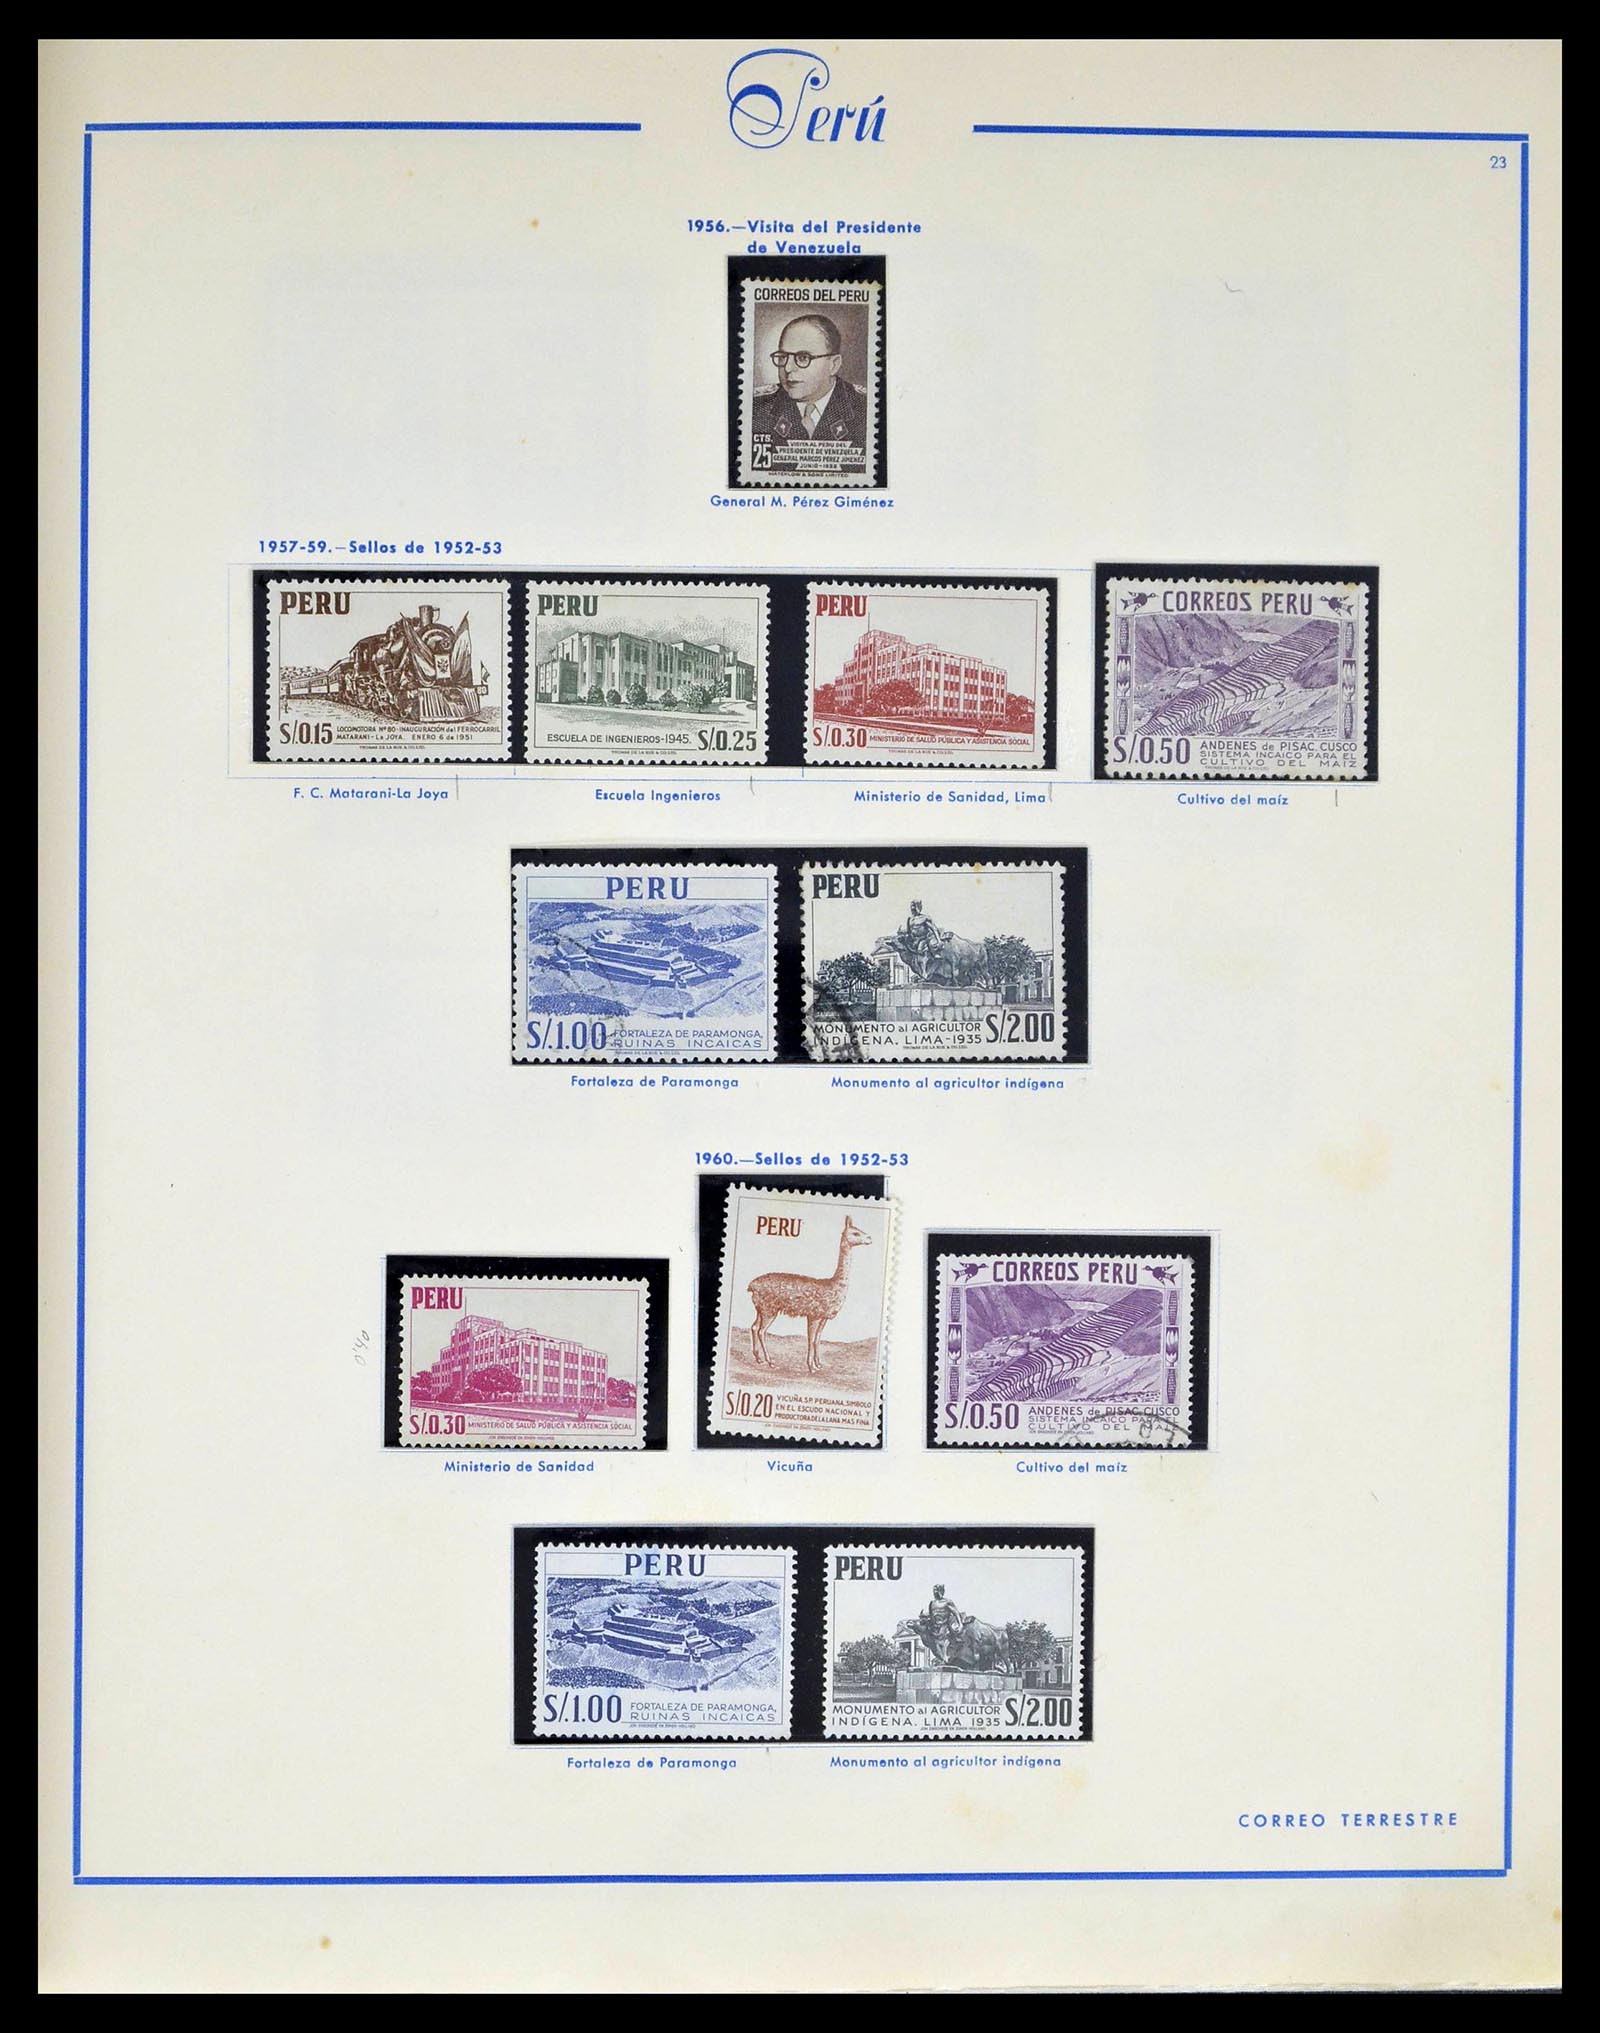 39214 0025 - Stamp collection 39214 Peru 1857-1981.